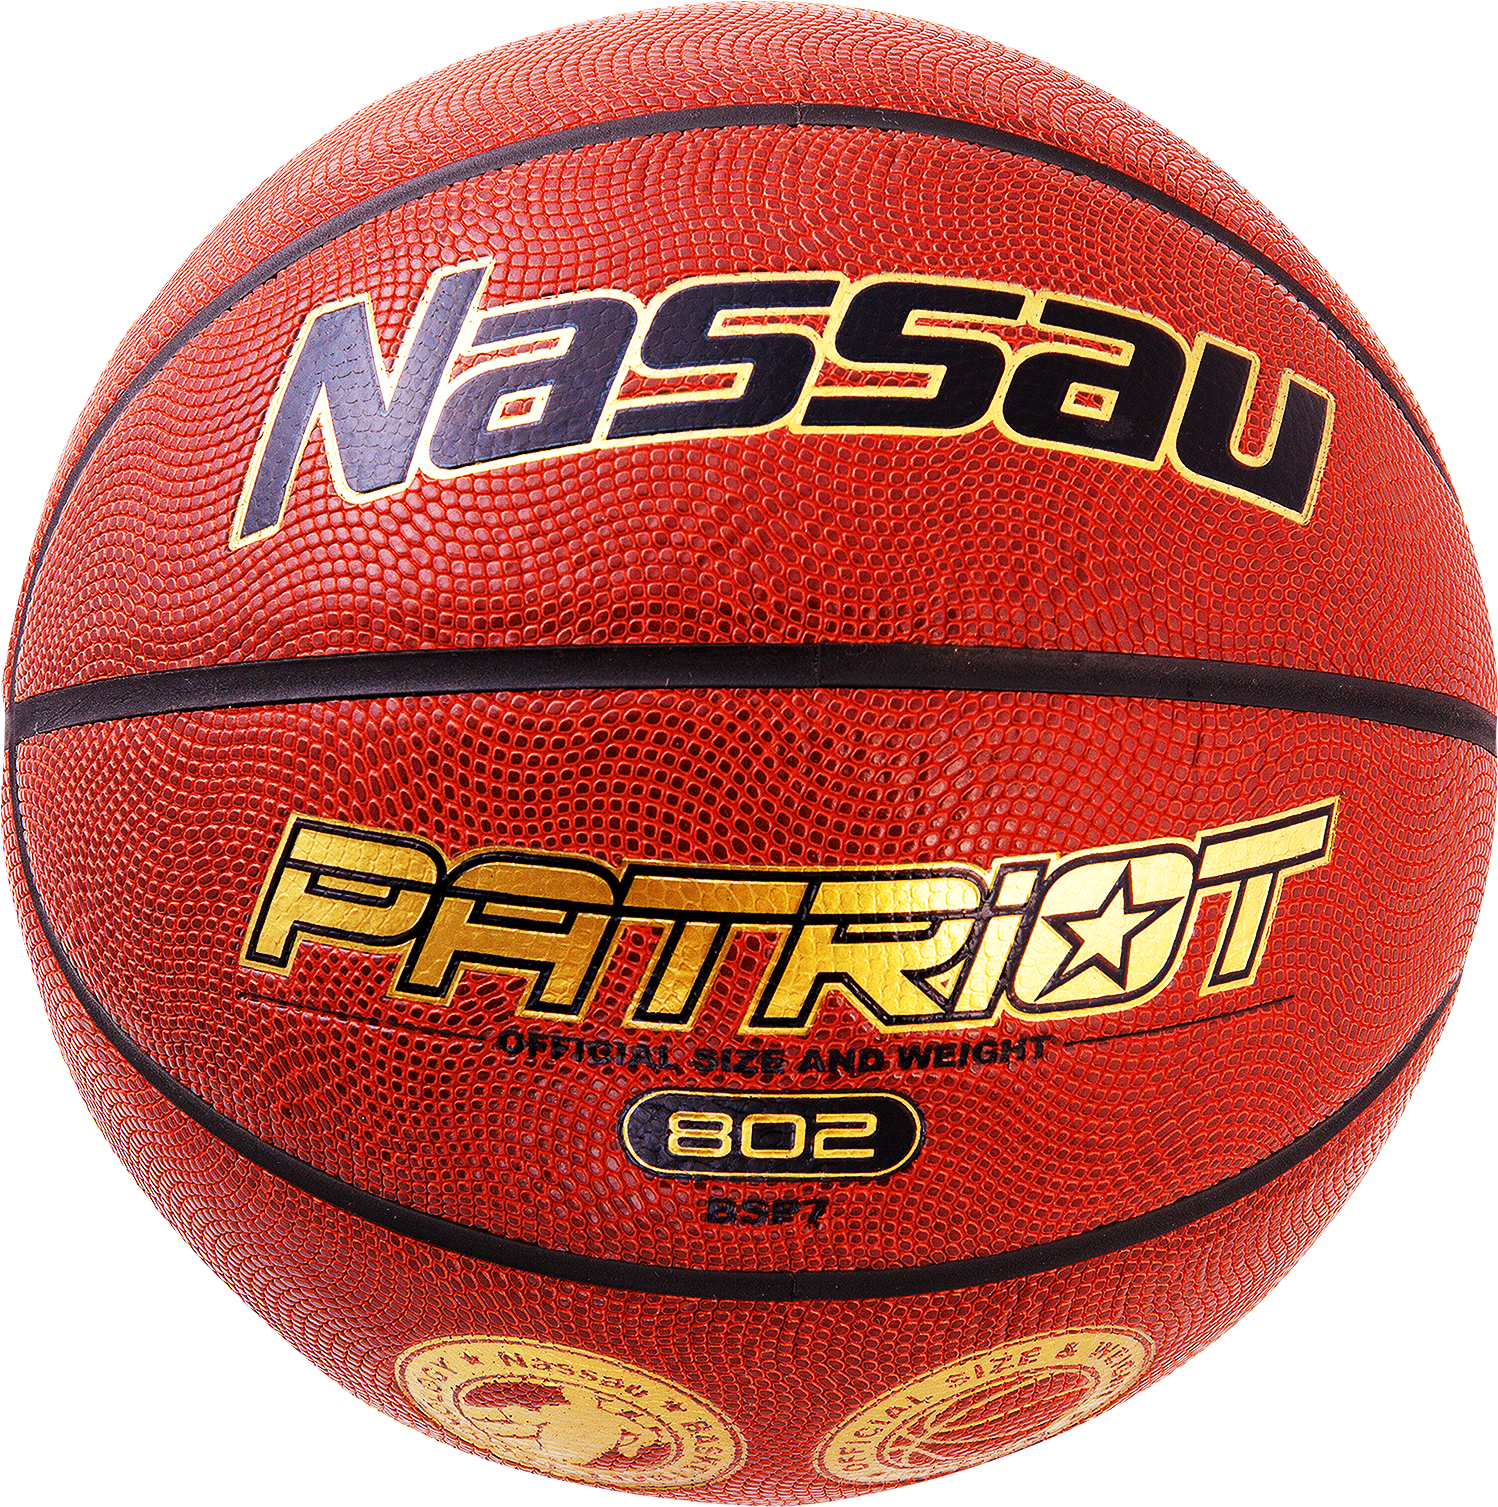 Nassau Patriot 802 Basketball